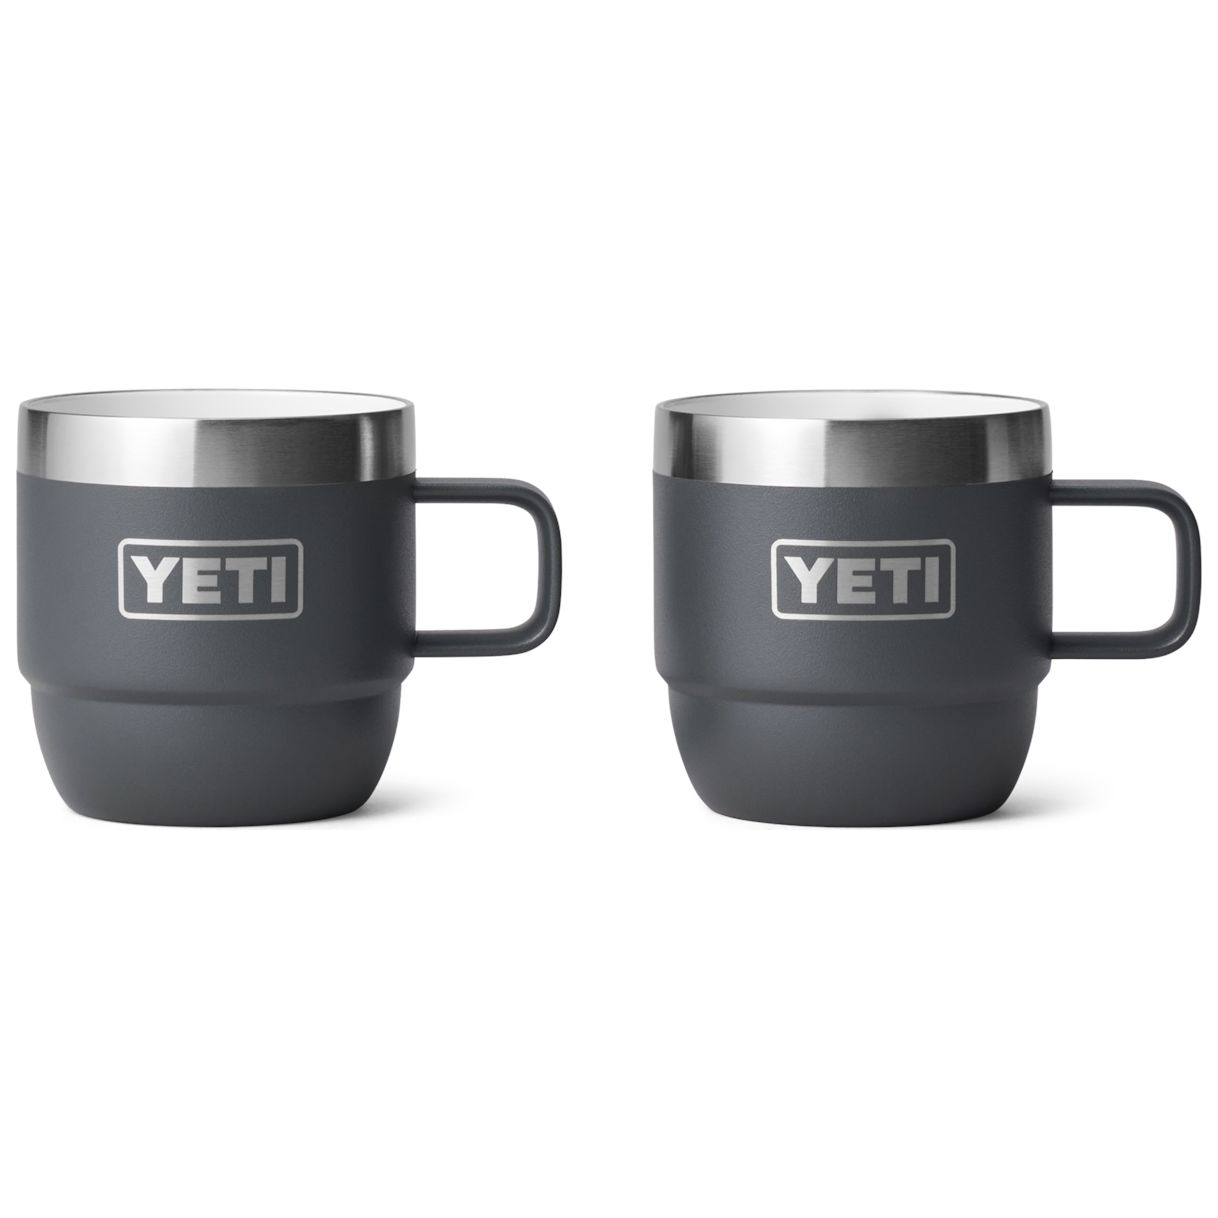 YETI Rambler 6 oz Espresso Mug 2Pk Charcoal Image 01